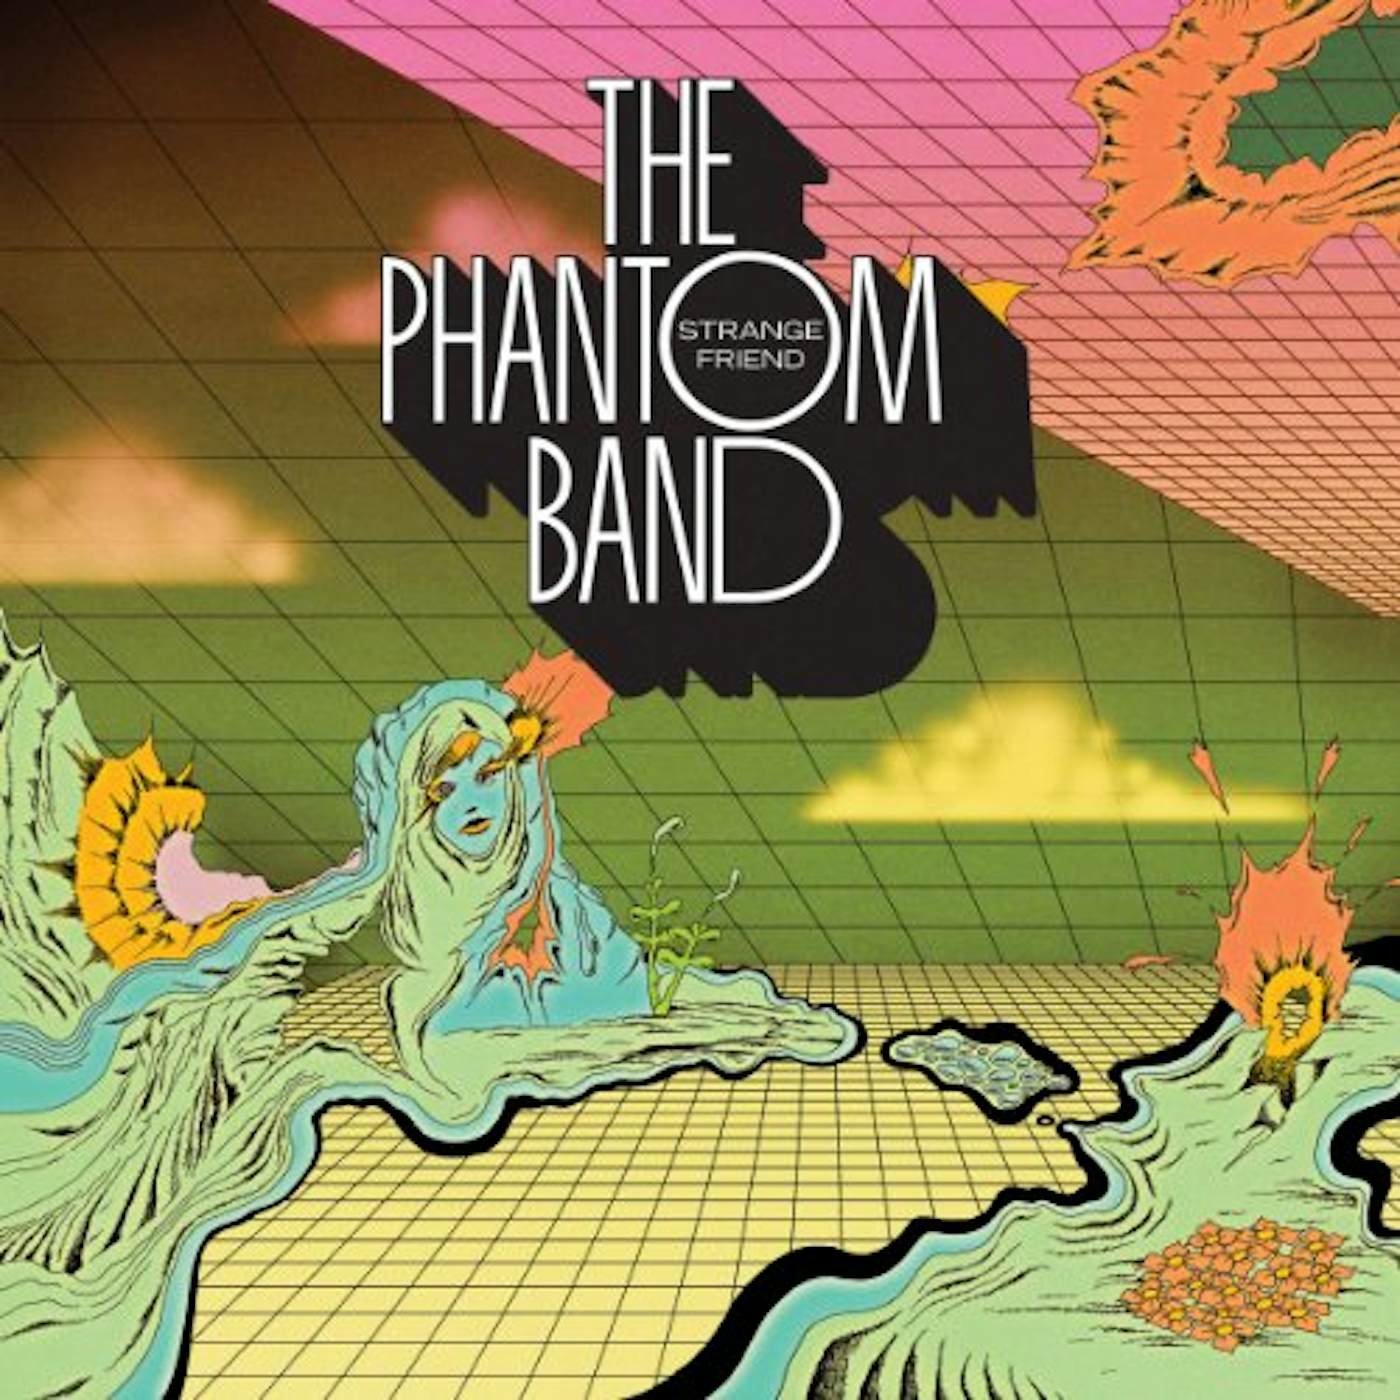 Phantom Band STRANGE FRIEND CD